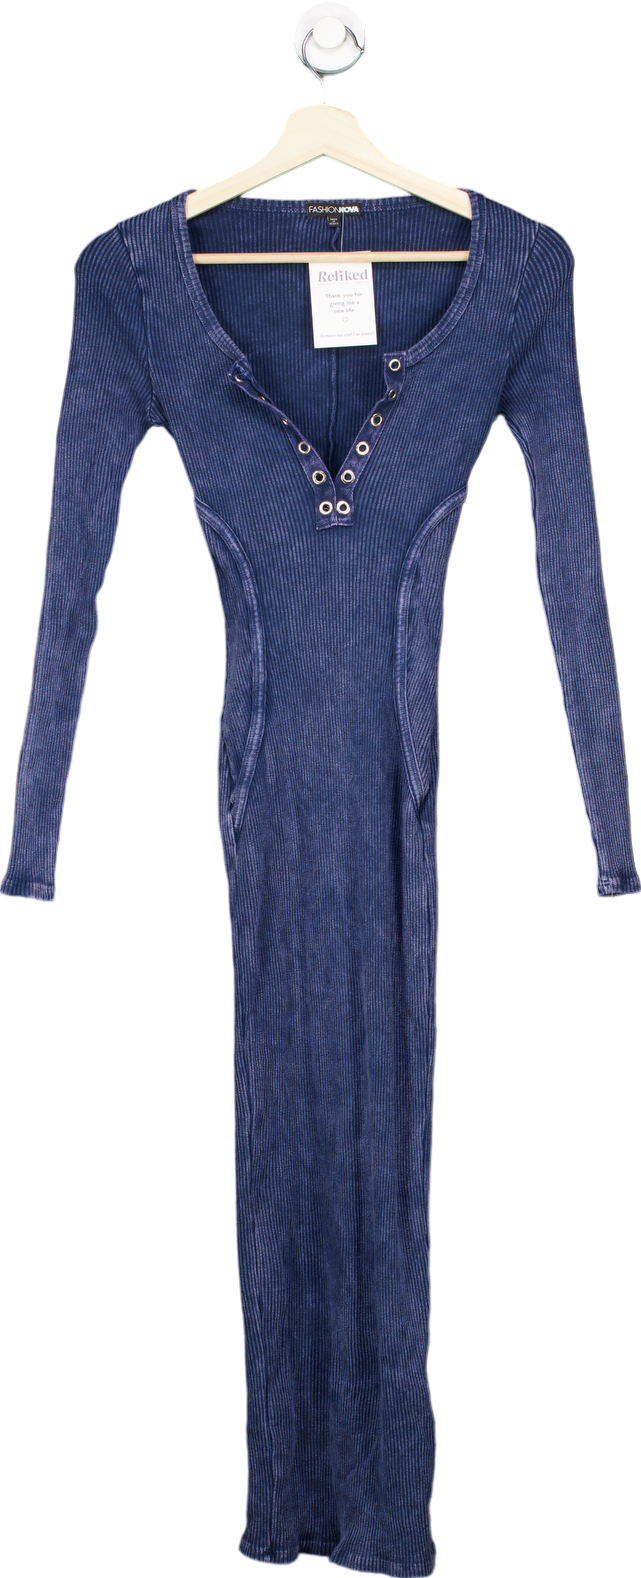 Fashion Nova Blue Ribbed Long Sleeve Dress XS